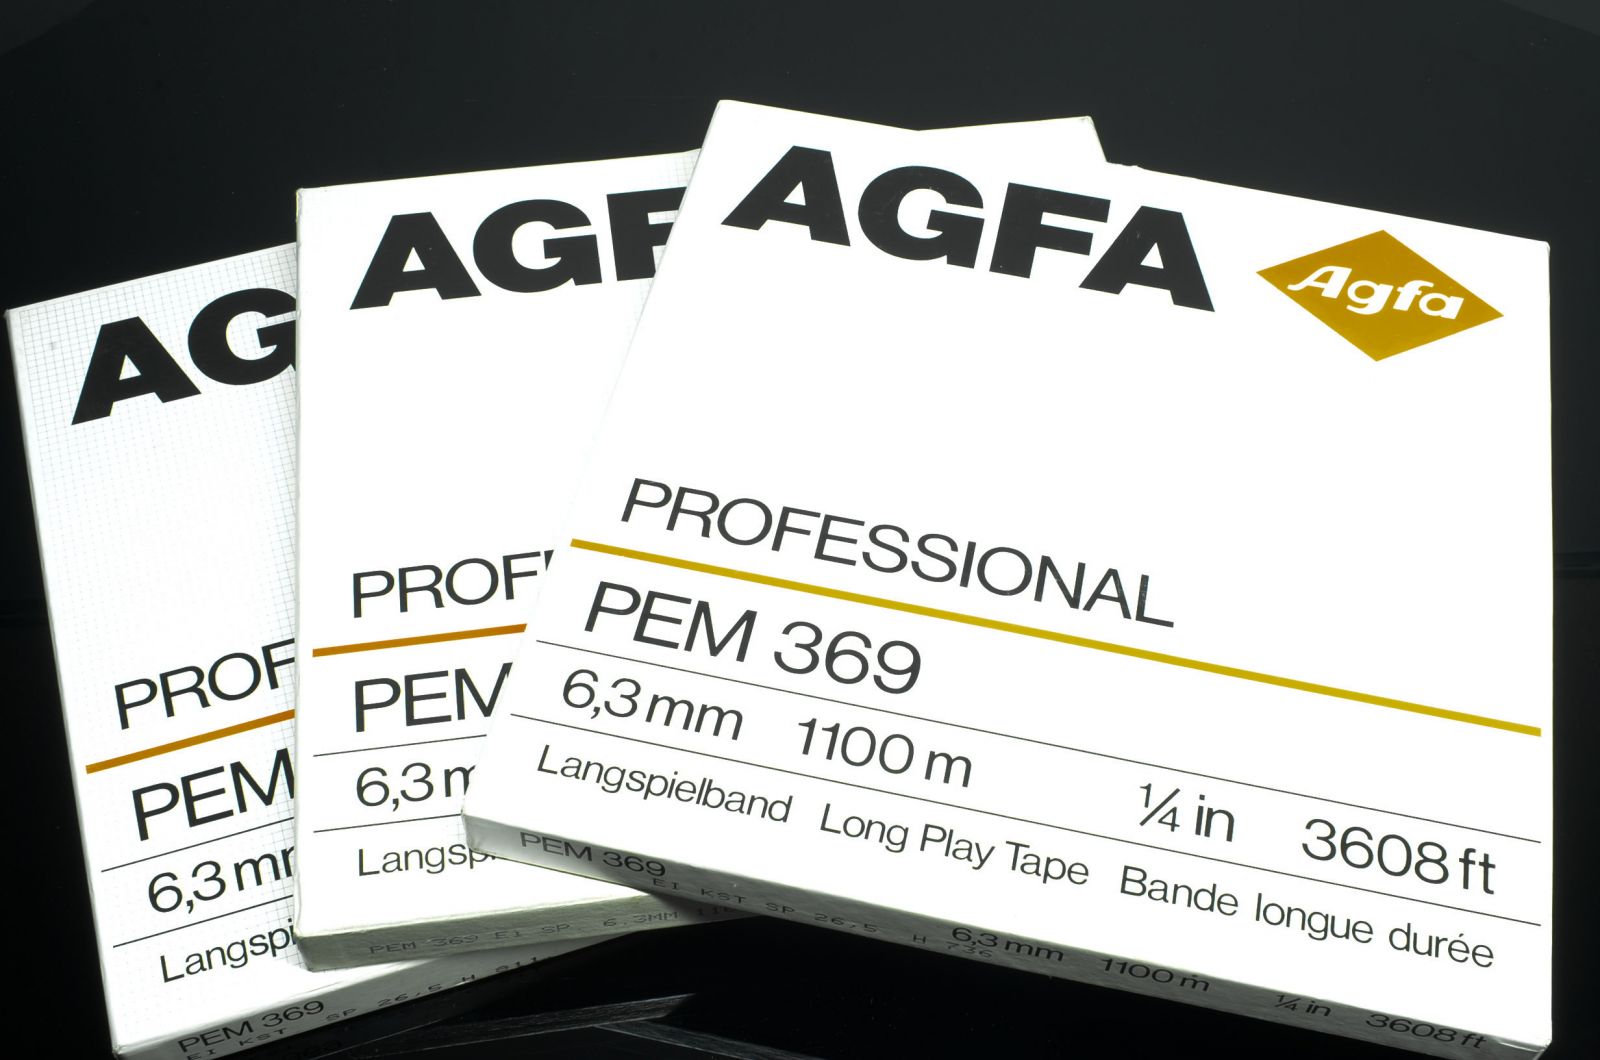 Agfa 4x Bobine AGFA PEM 369 PROFESSIONAL 26.5 cm 1100 m LP 10.5 in 3600 ft New reel   